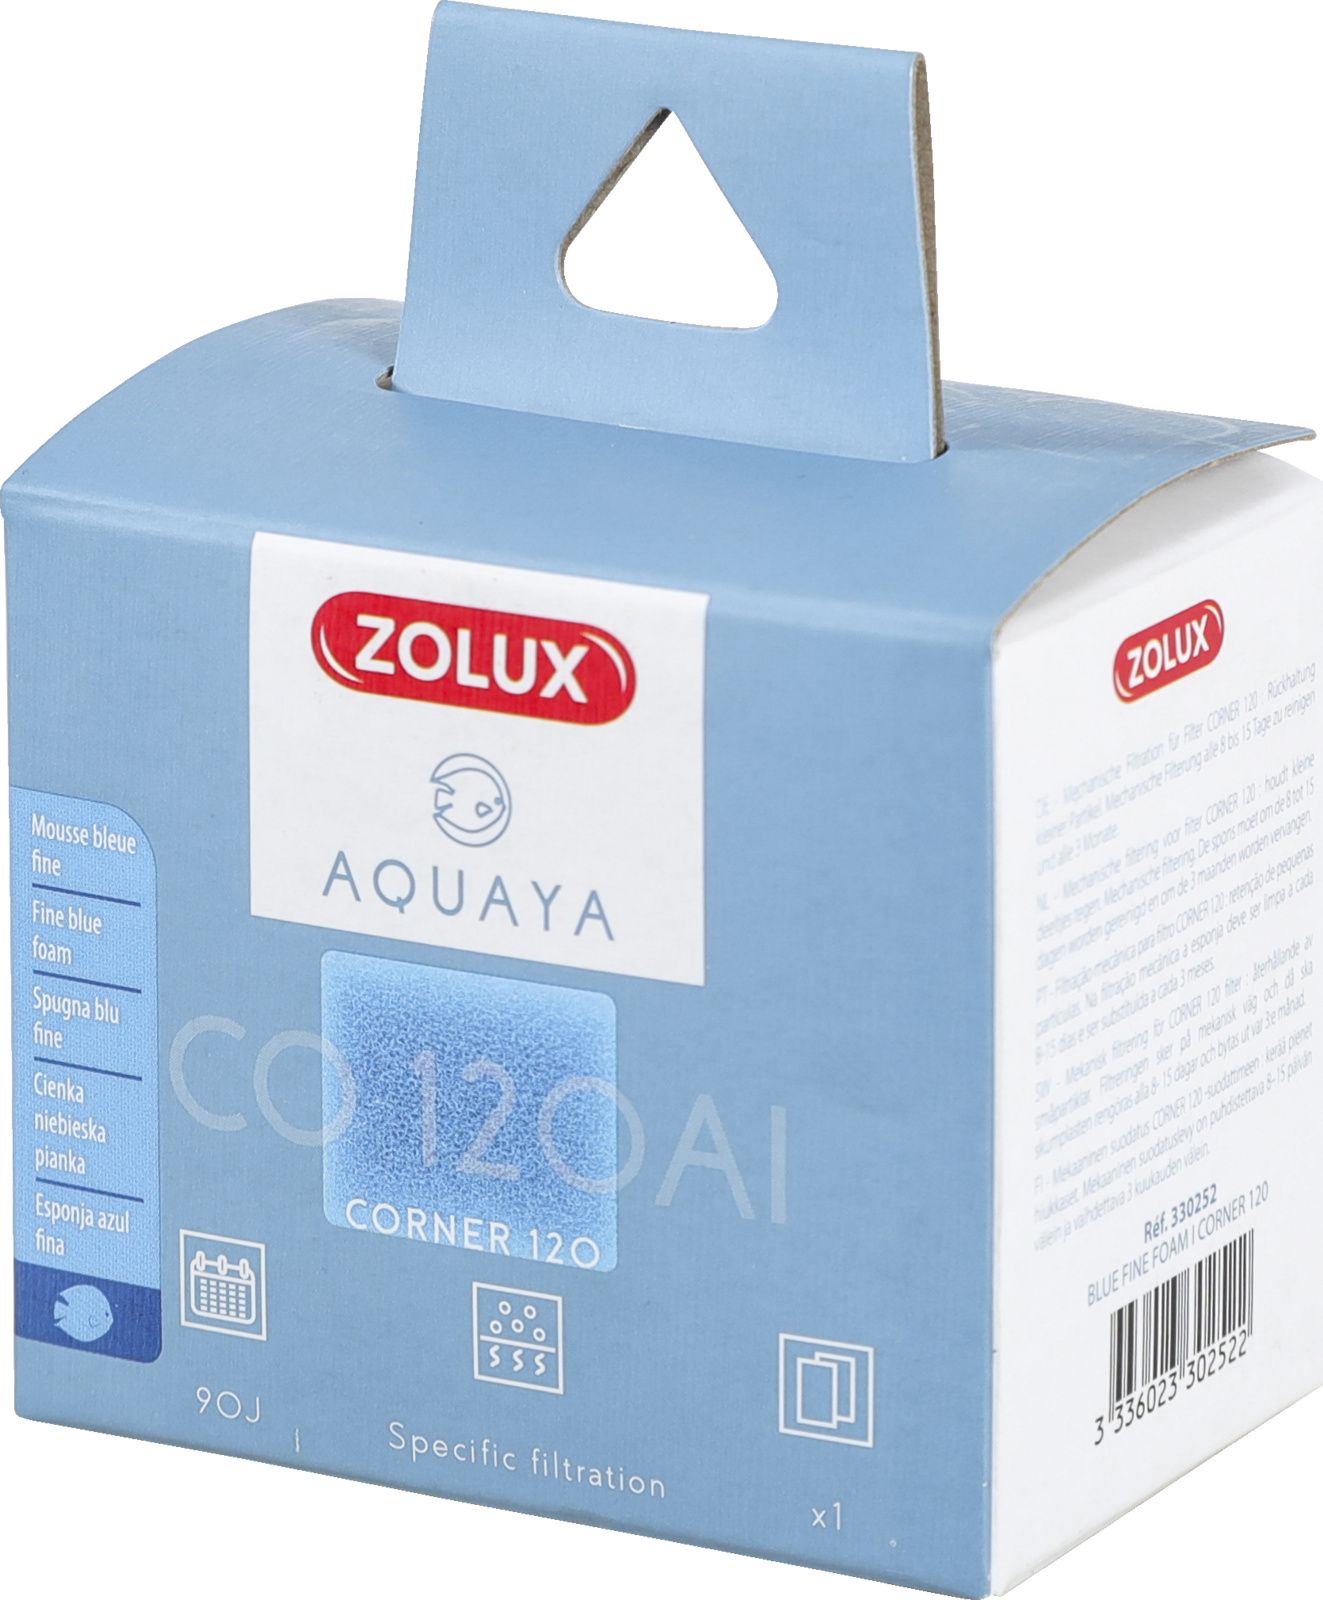 Zolux AQUAYA Wklad gabka Blue Fine Foam I Corner 120 7544705 (3336023302522) akvārija filtrs